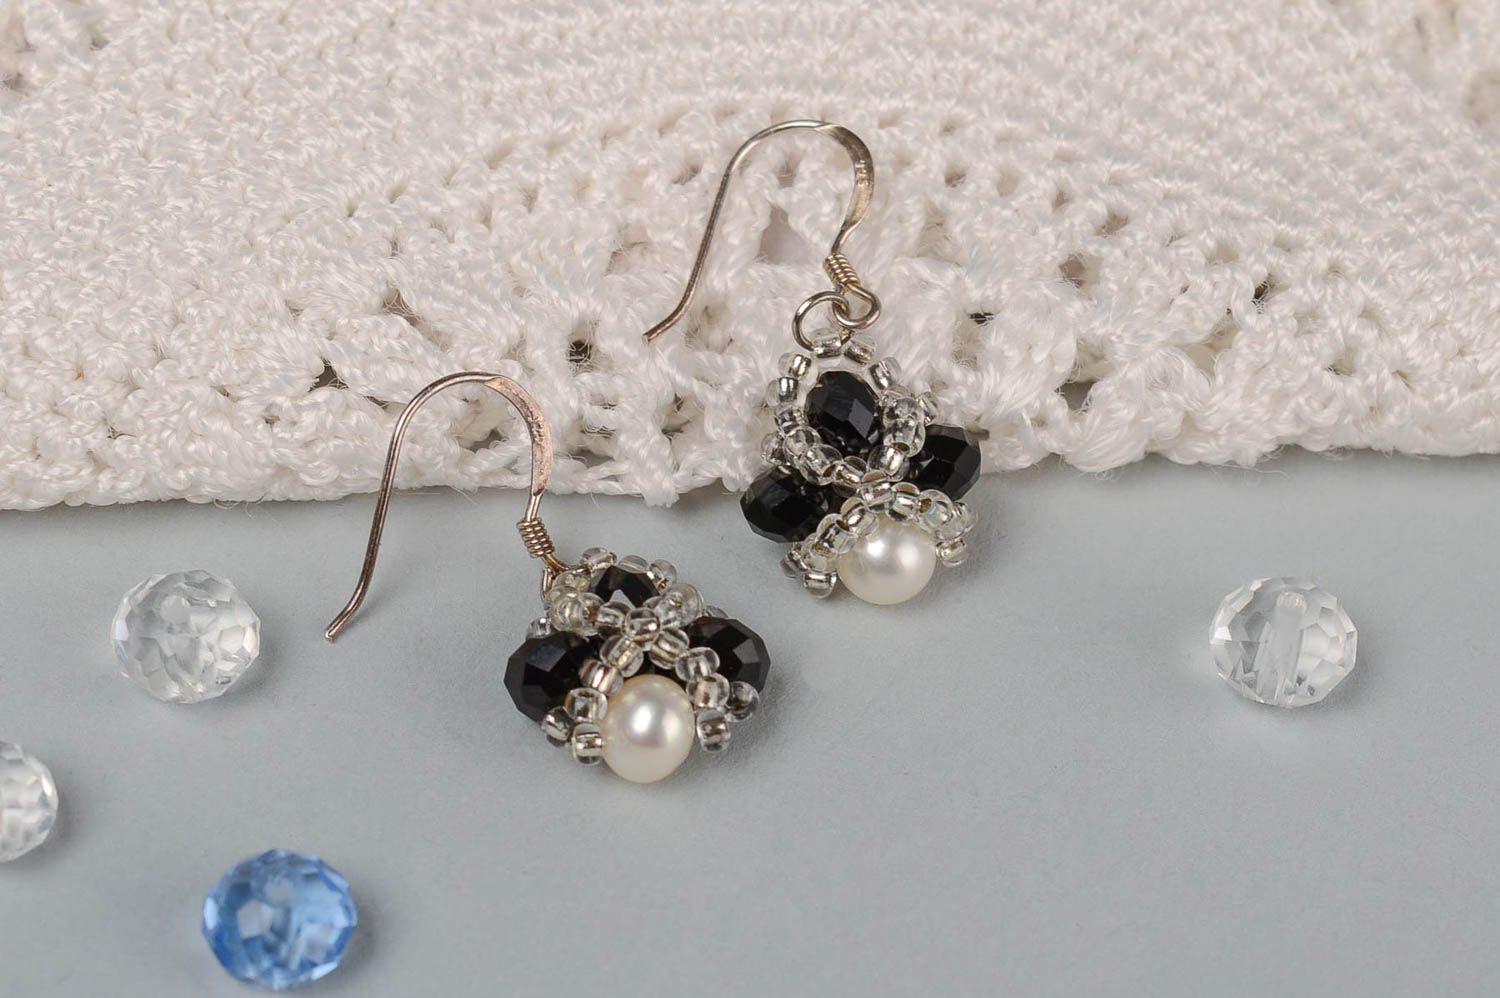 Handmade women earrings with charms pearl earrings evening earrings for girls photo 1